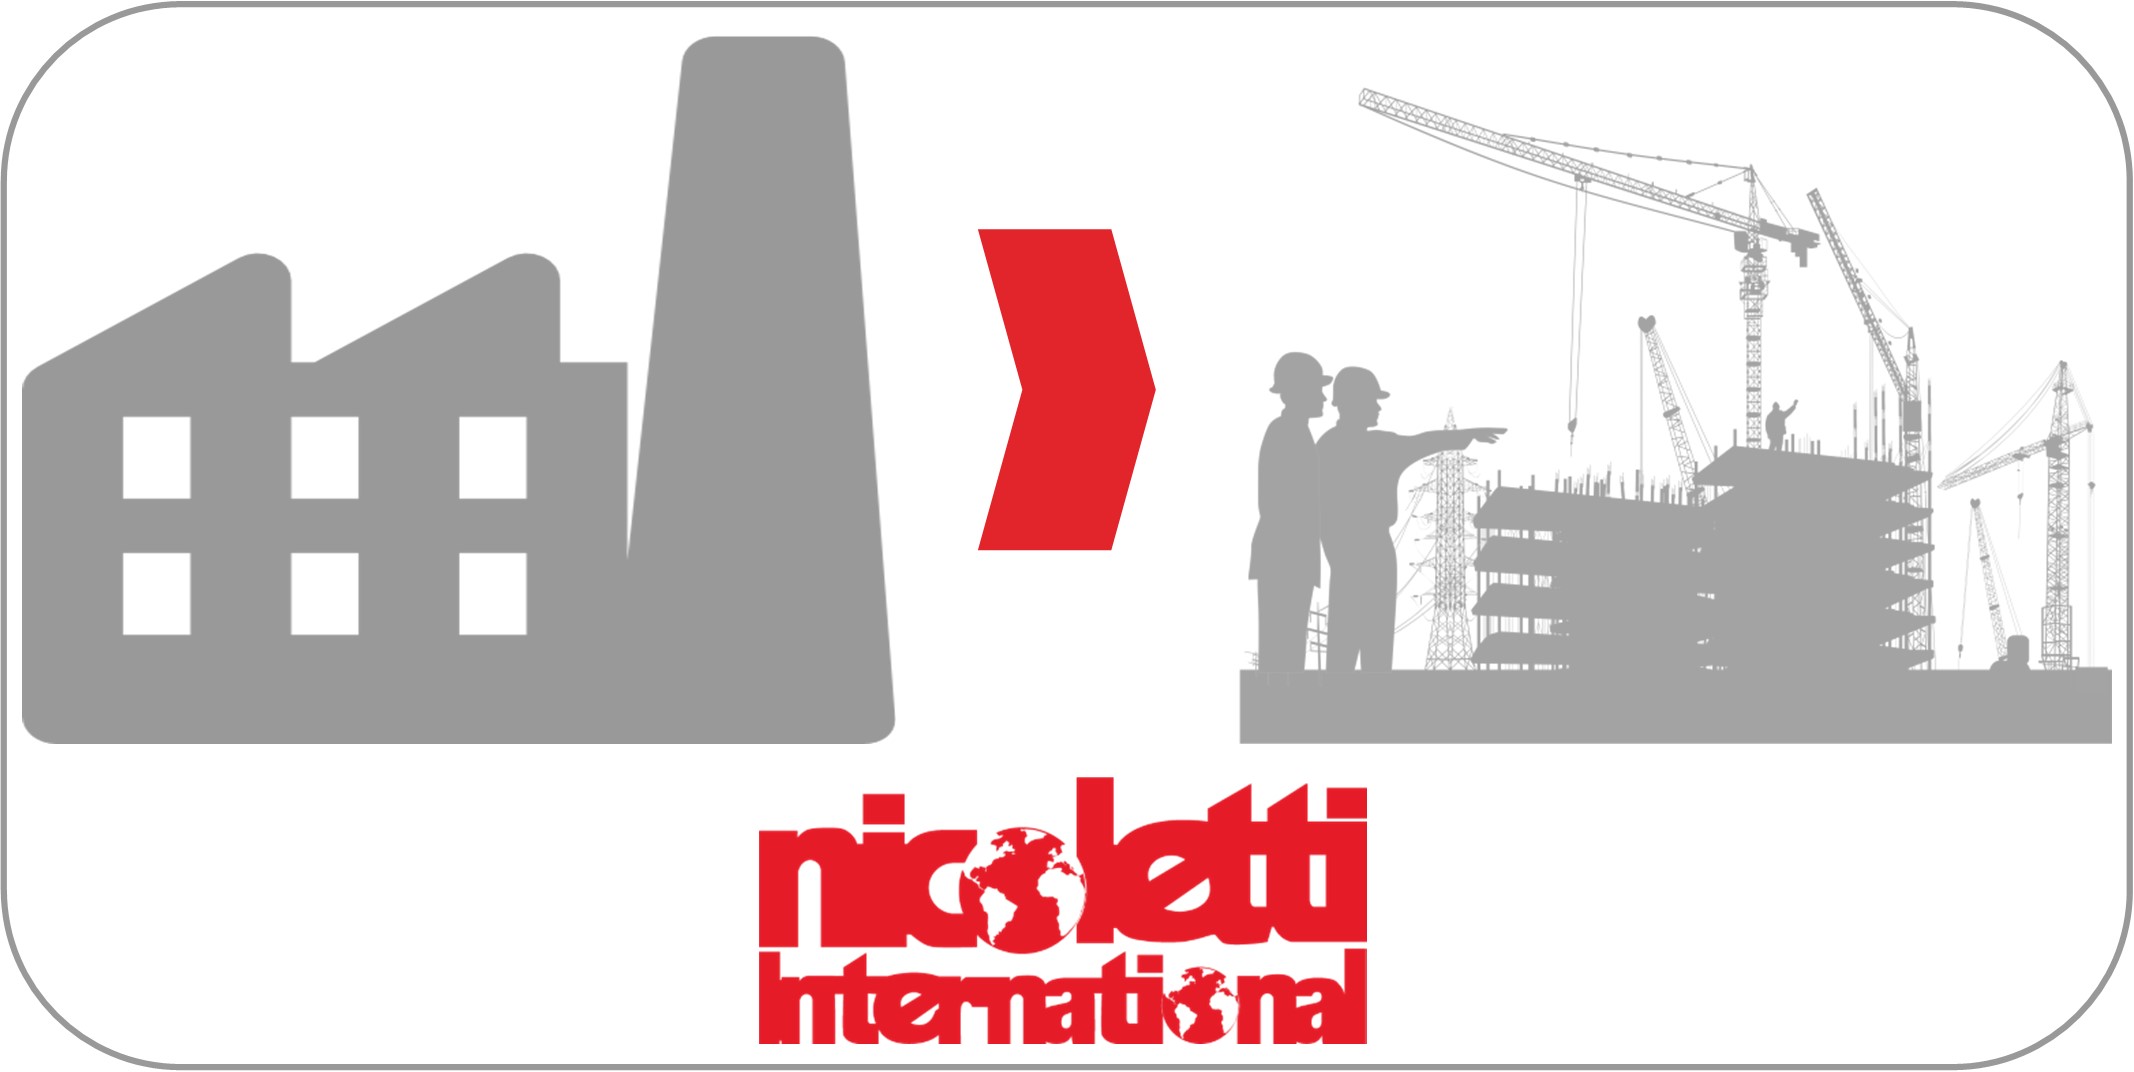 Nicoletti-International